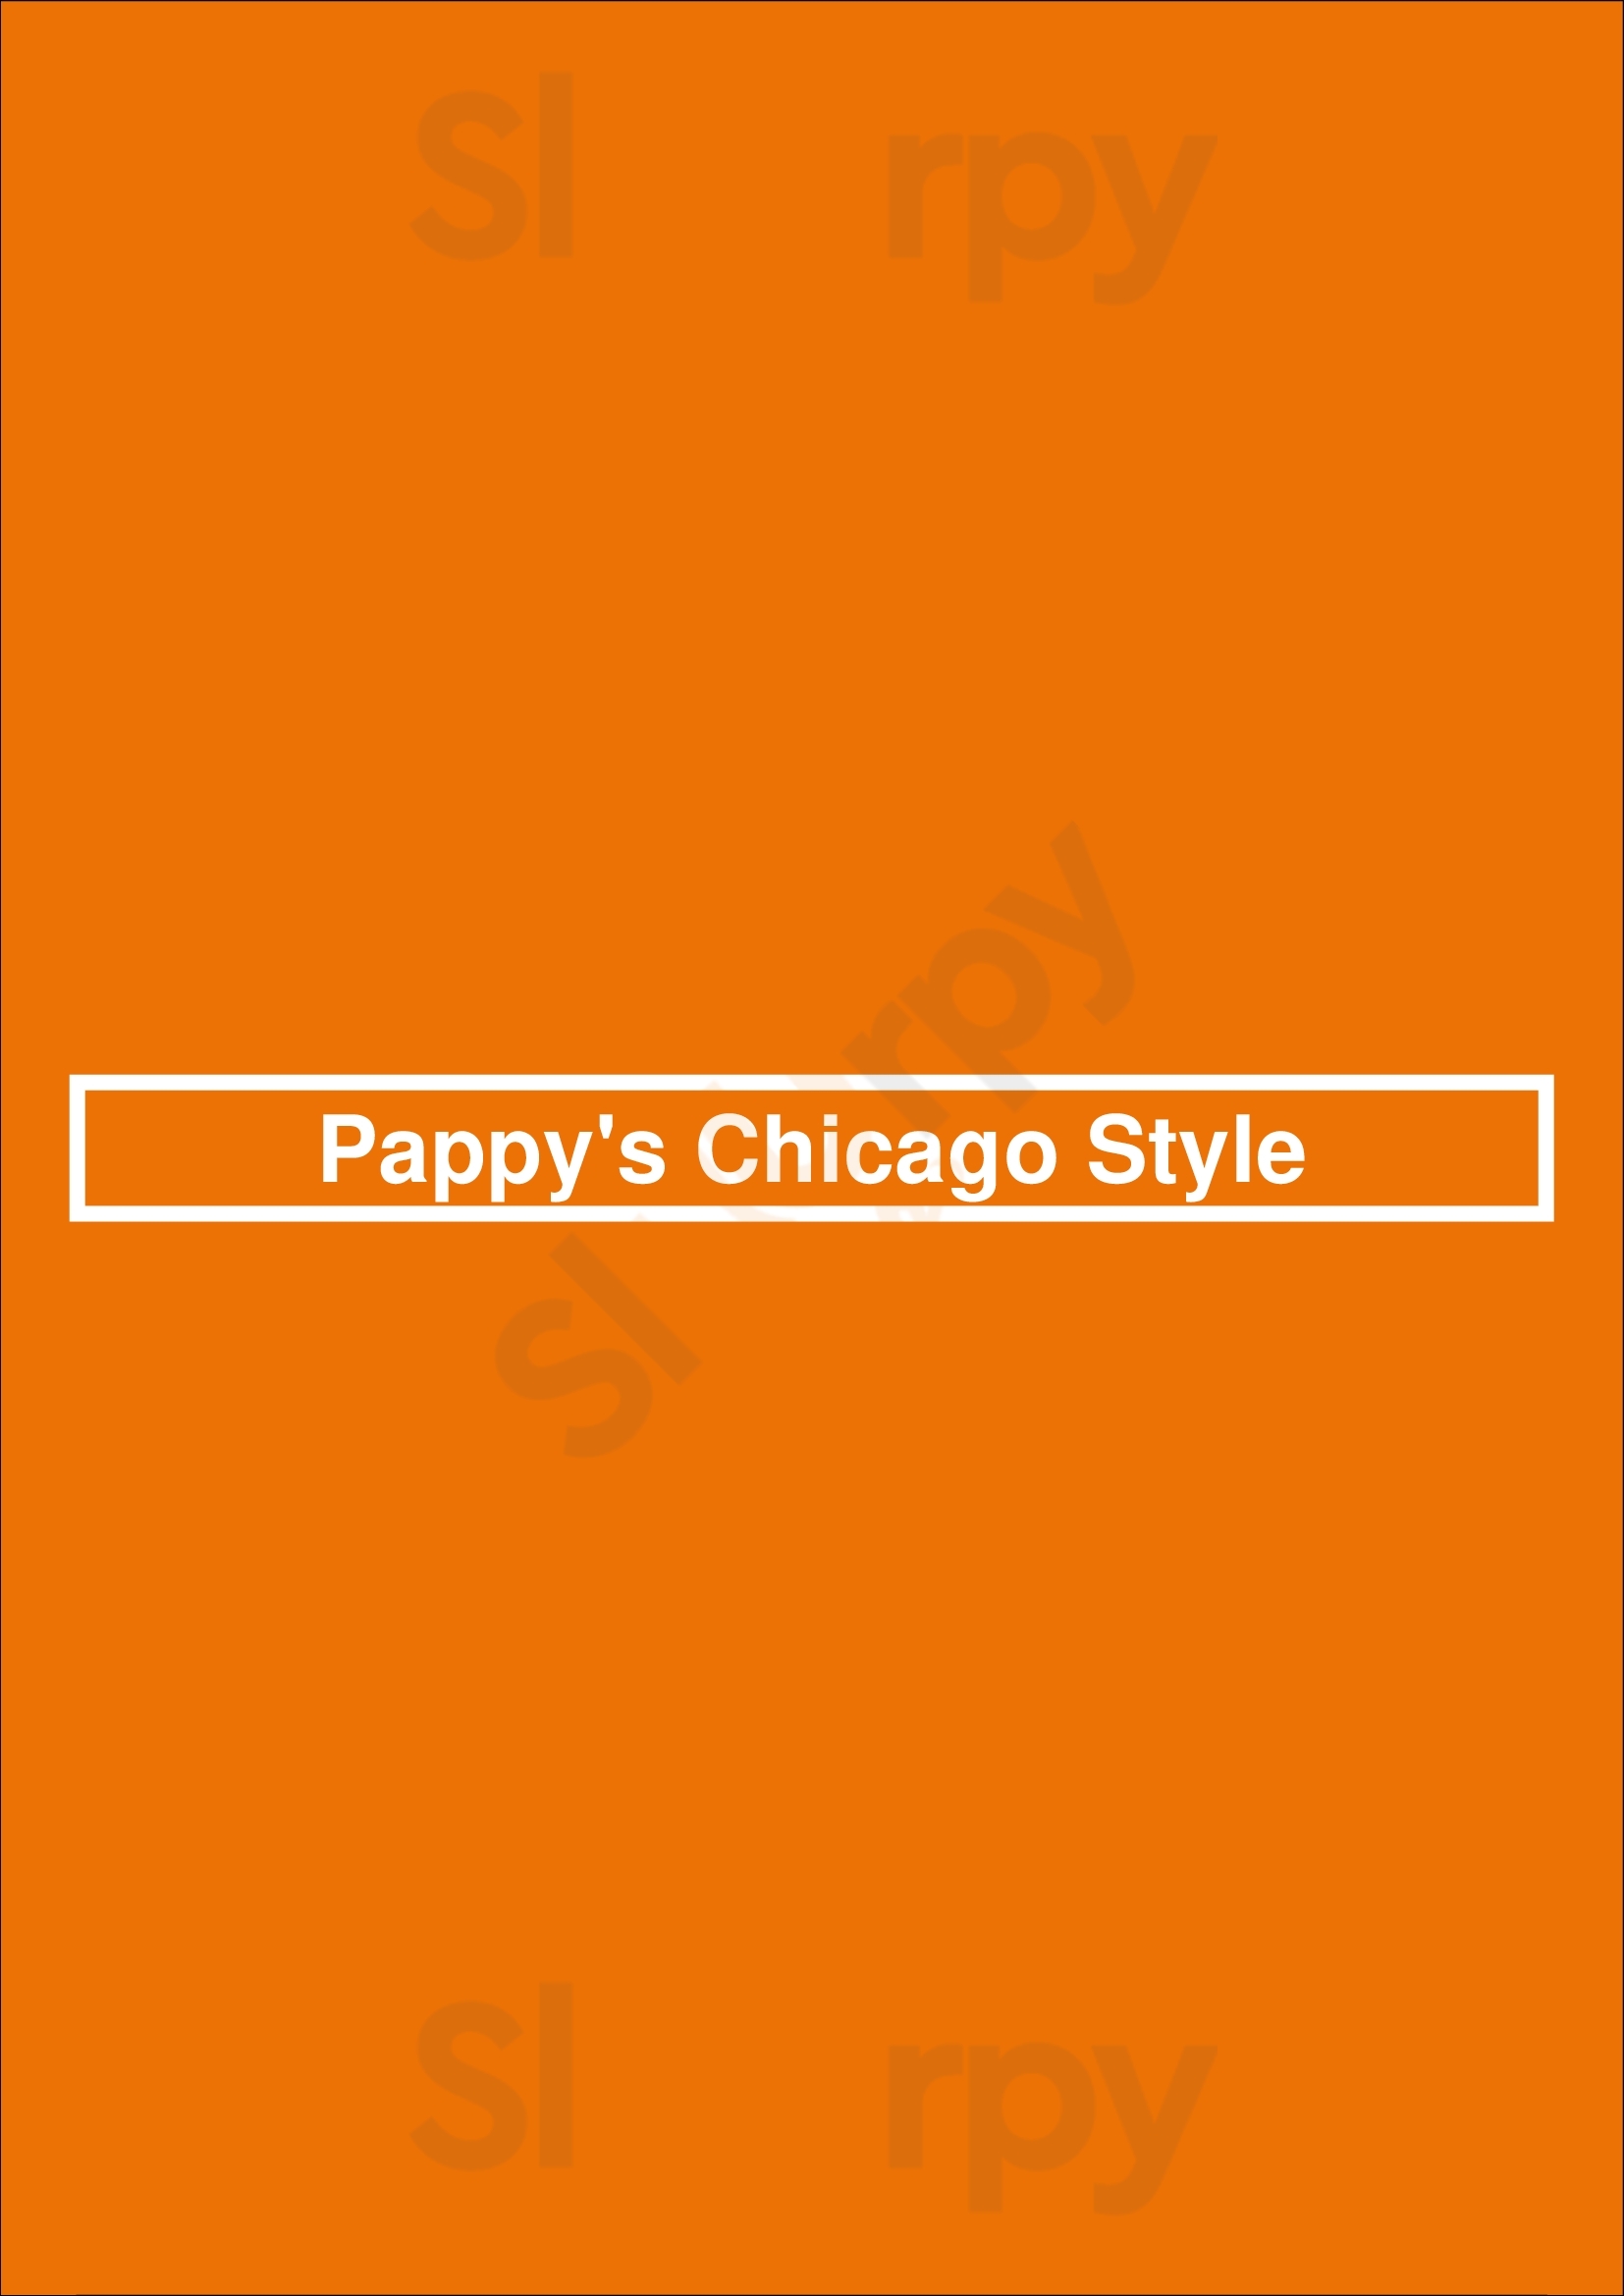 Pappy's Chicago Style Minneapolis Menu - 1